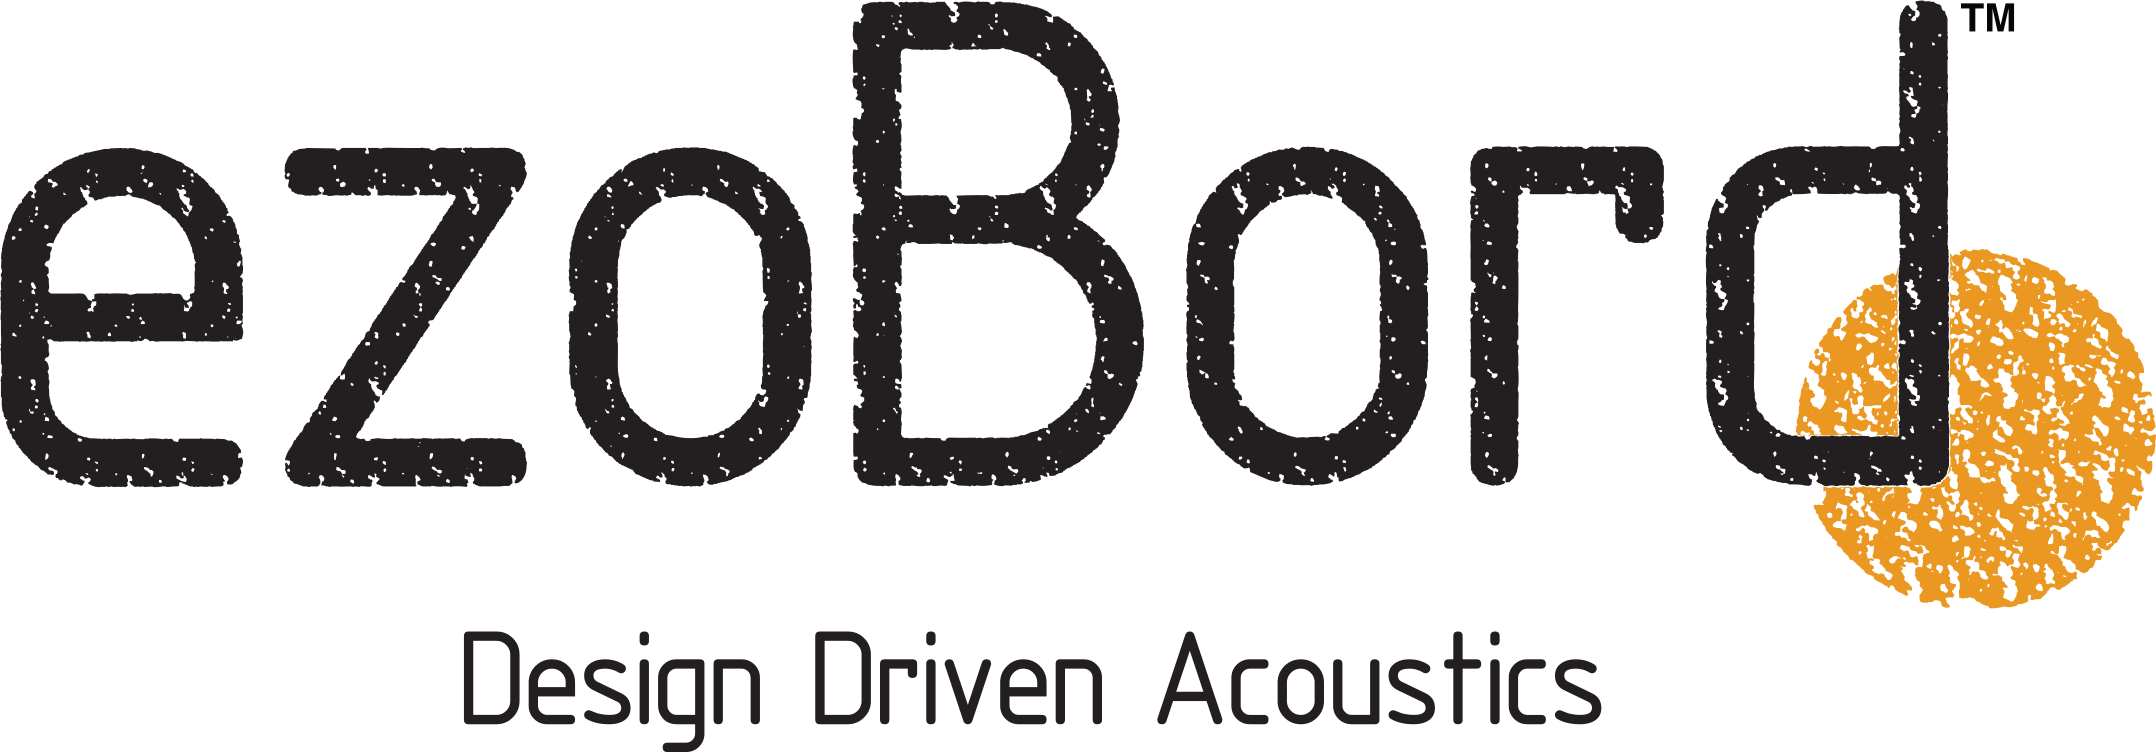 ezoBord Logo.png